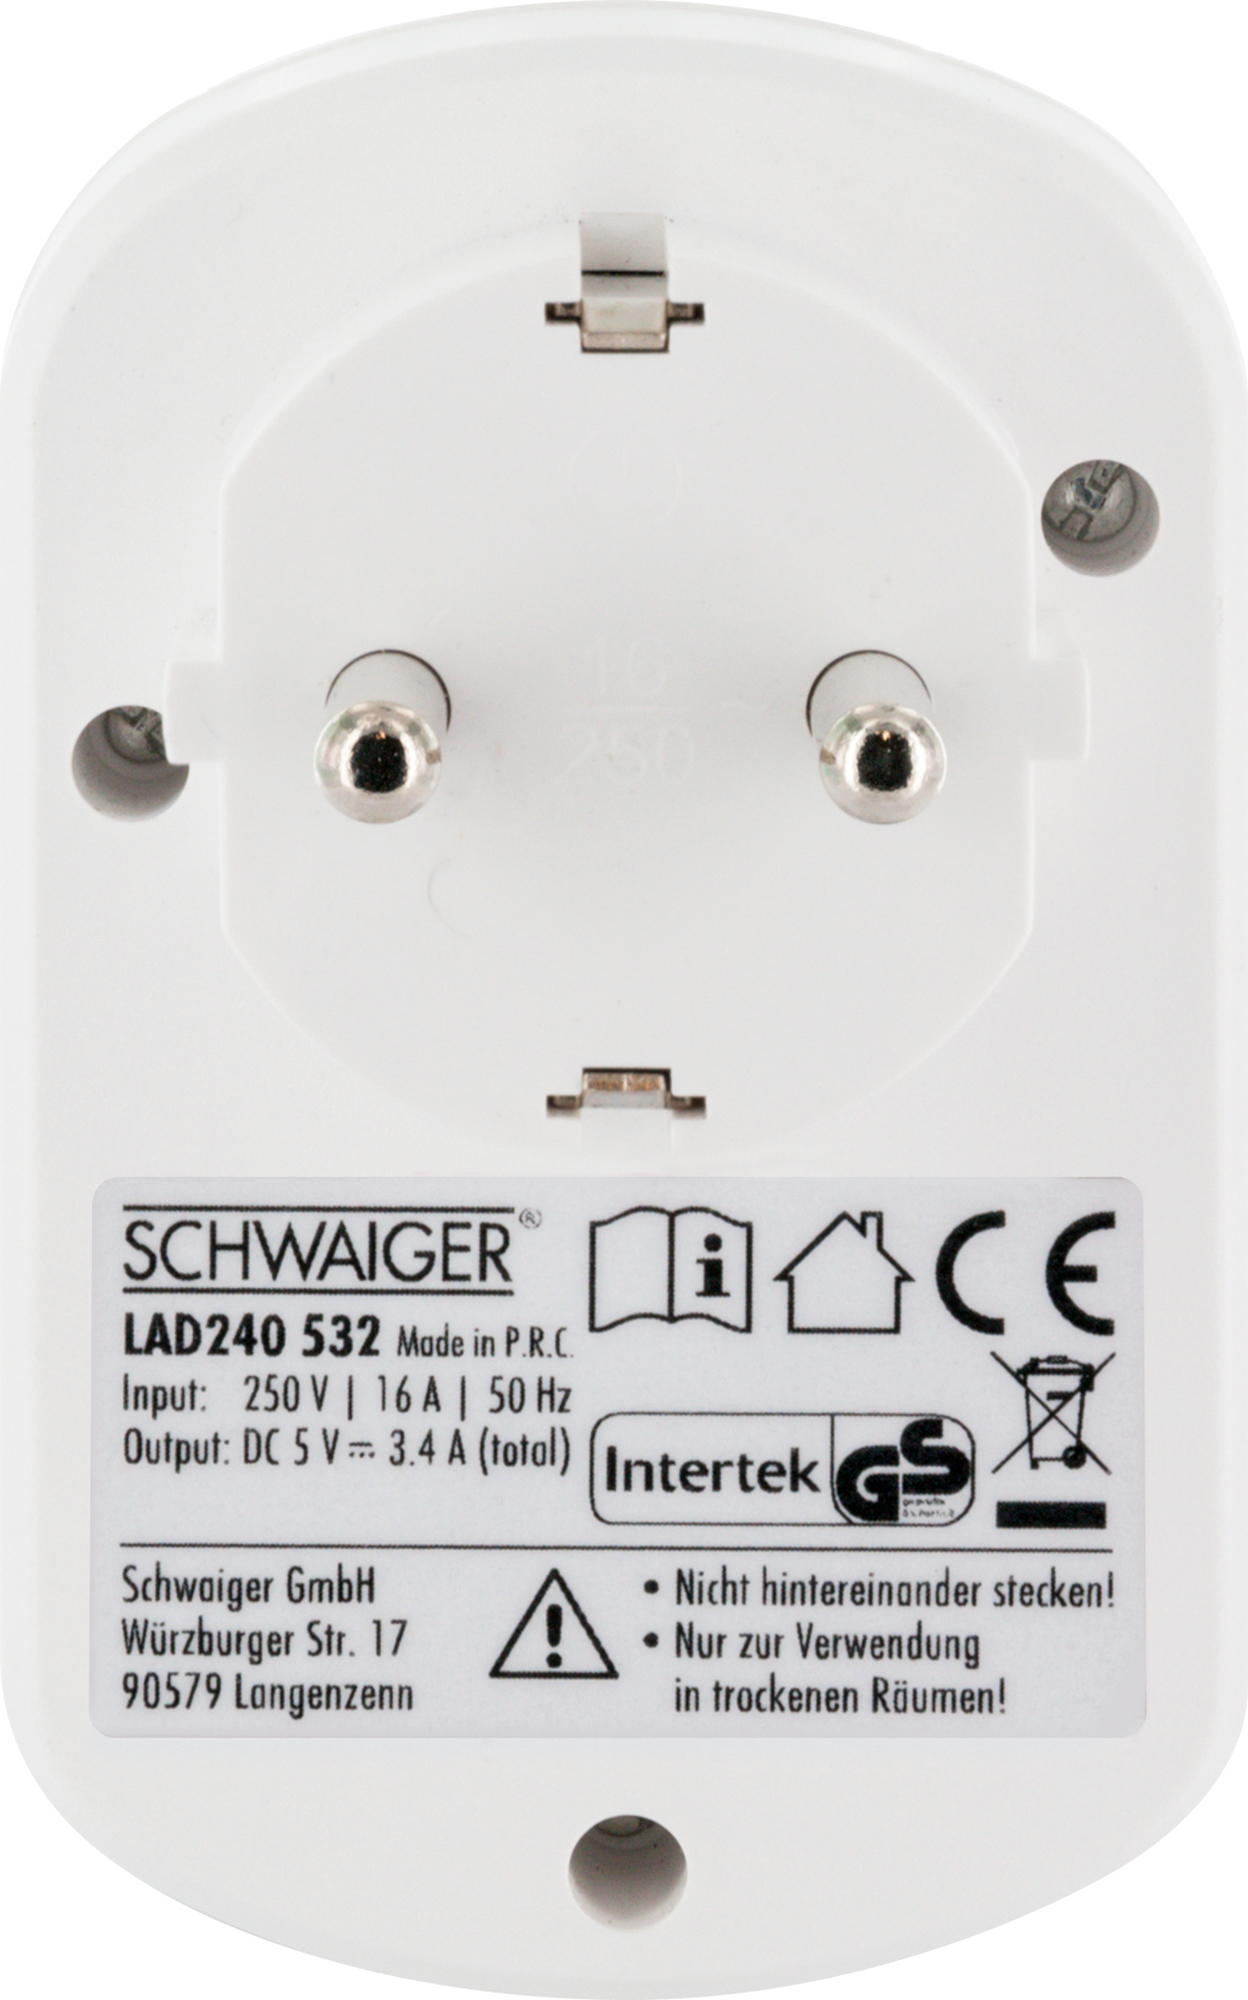 SCHWAIGER -LAD240 Huawei, Volt, mit Weiß Ladeadapter durchgeschleifter Steckdose 230 532- z.B. V Samsung, LG, 230 USB etc